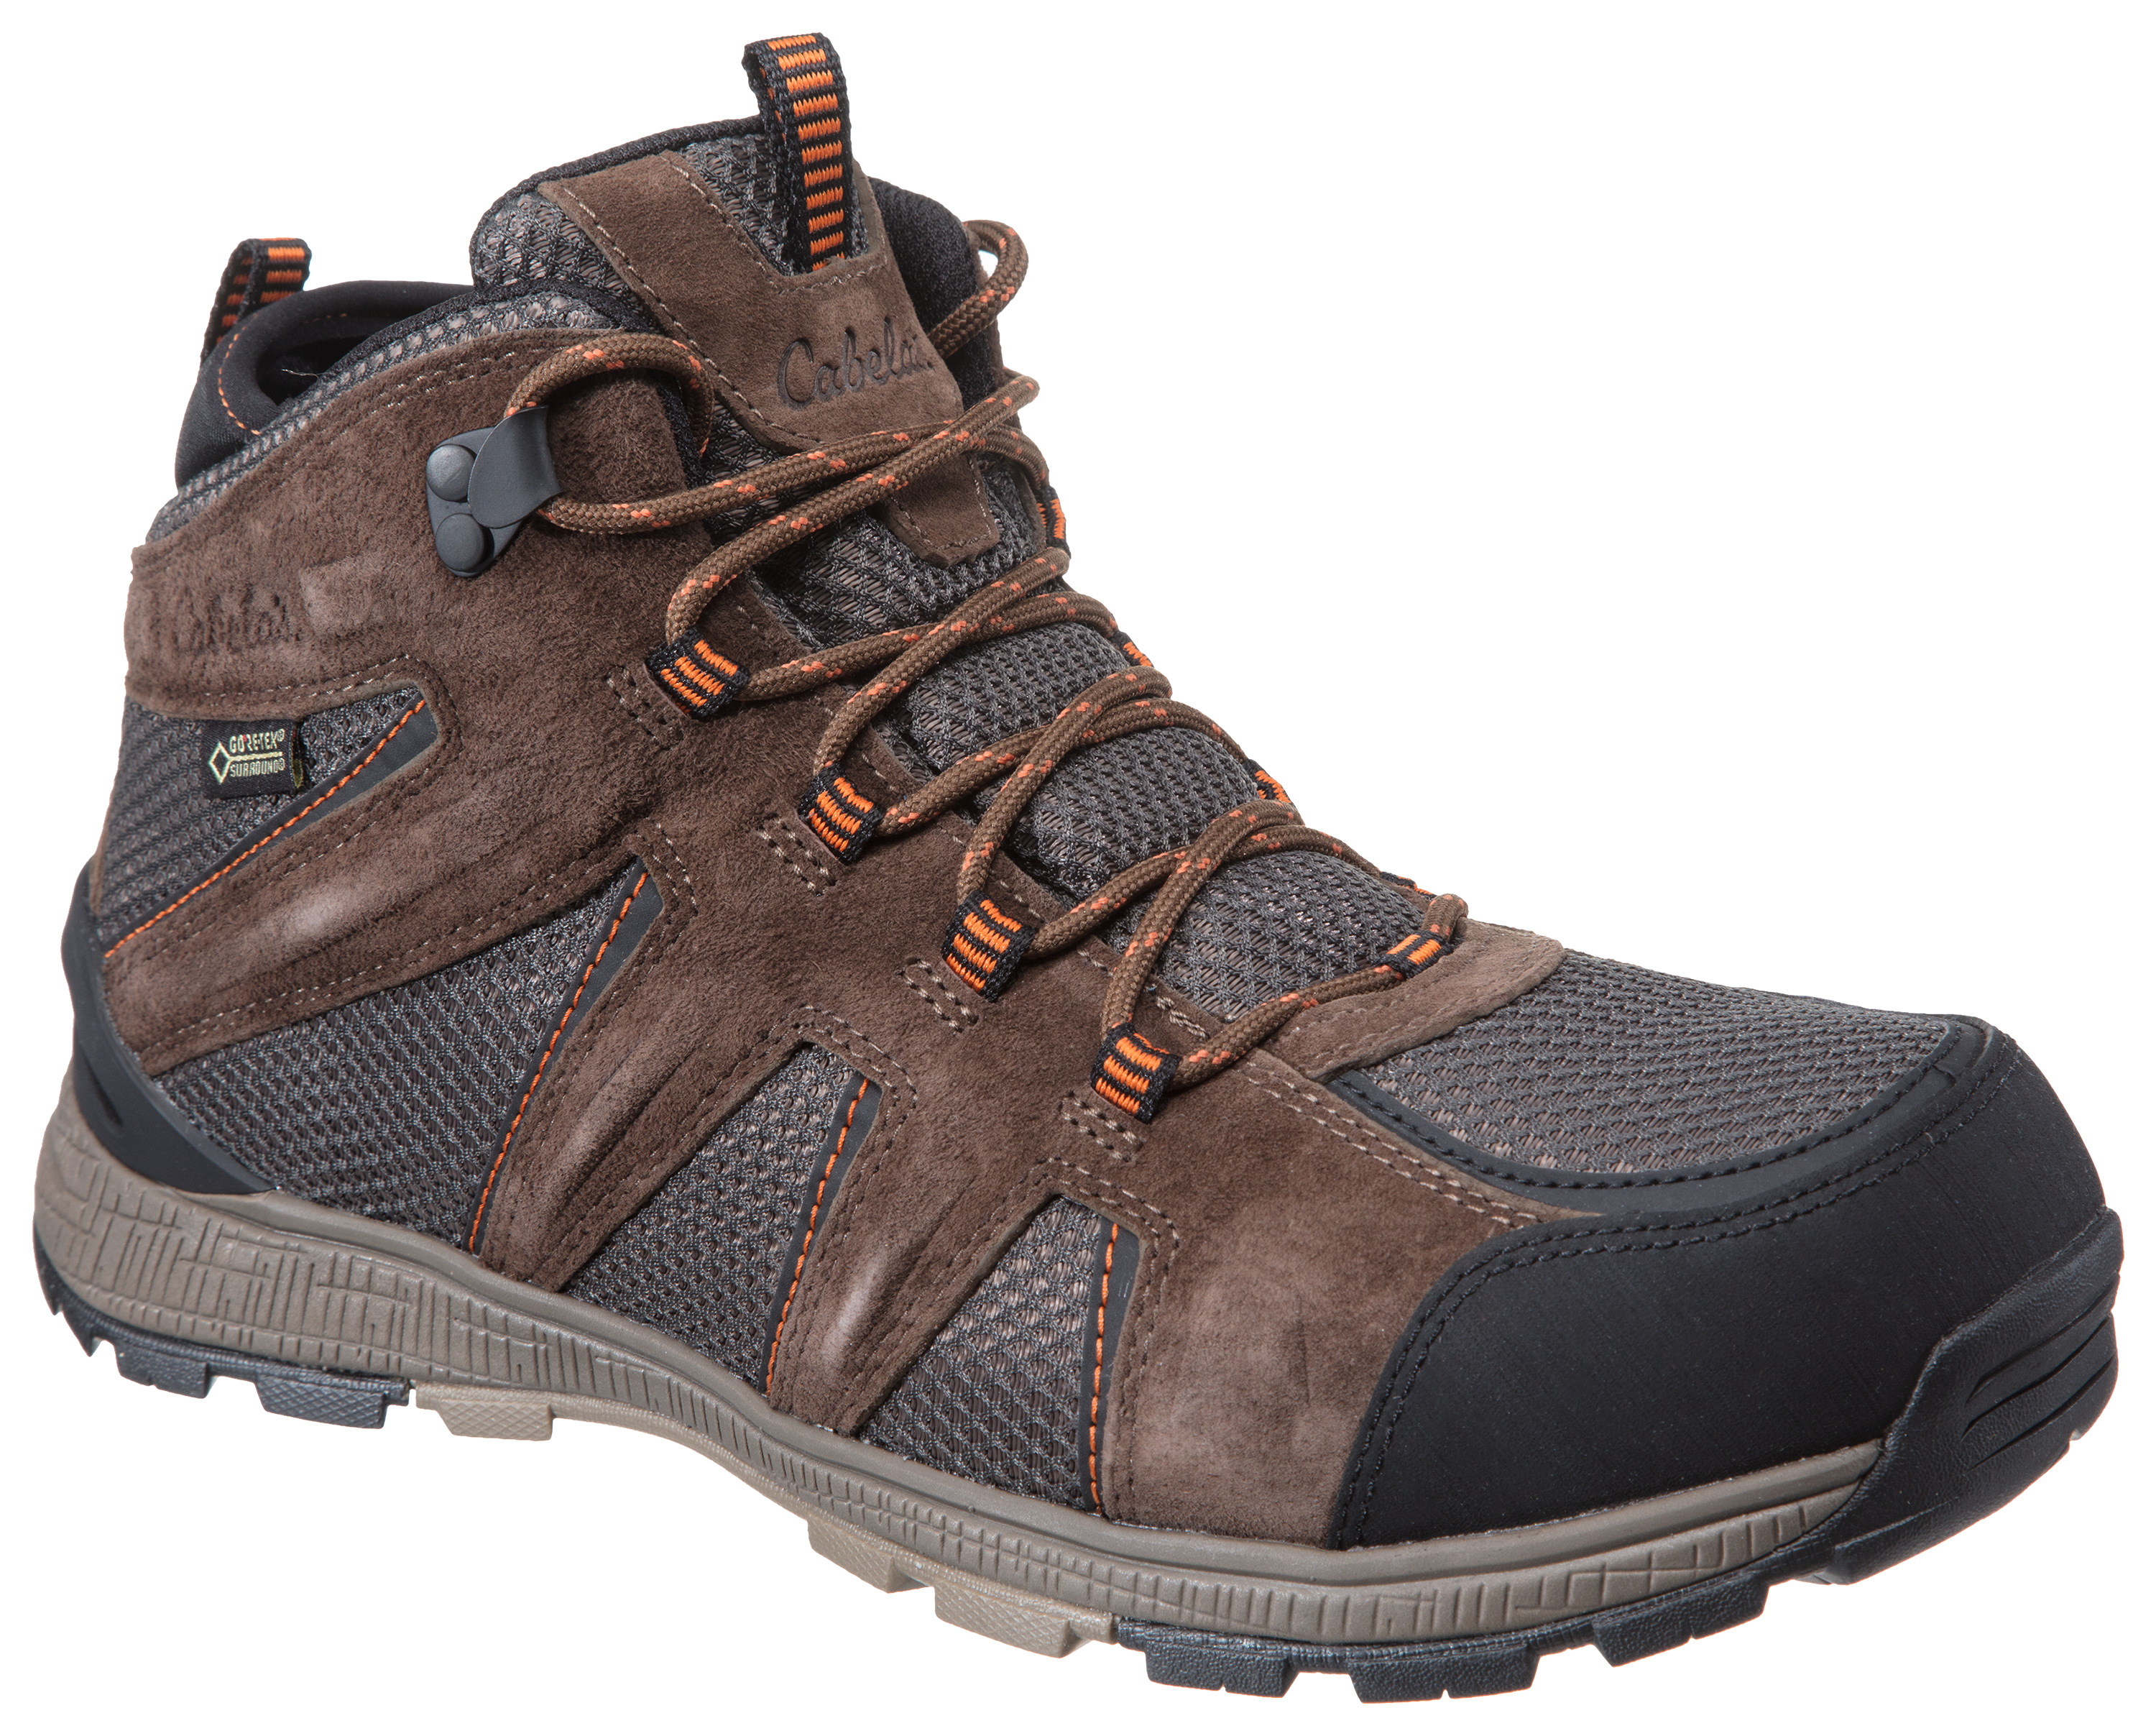 Cabela's 360 Mid GORE-TEX Hiking Boots for Men - Teak - 13M